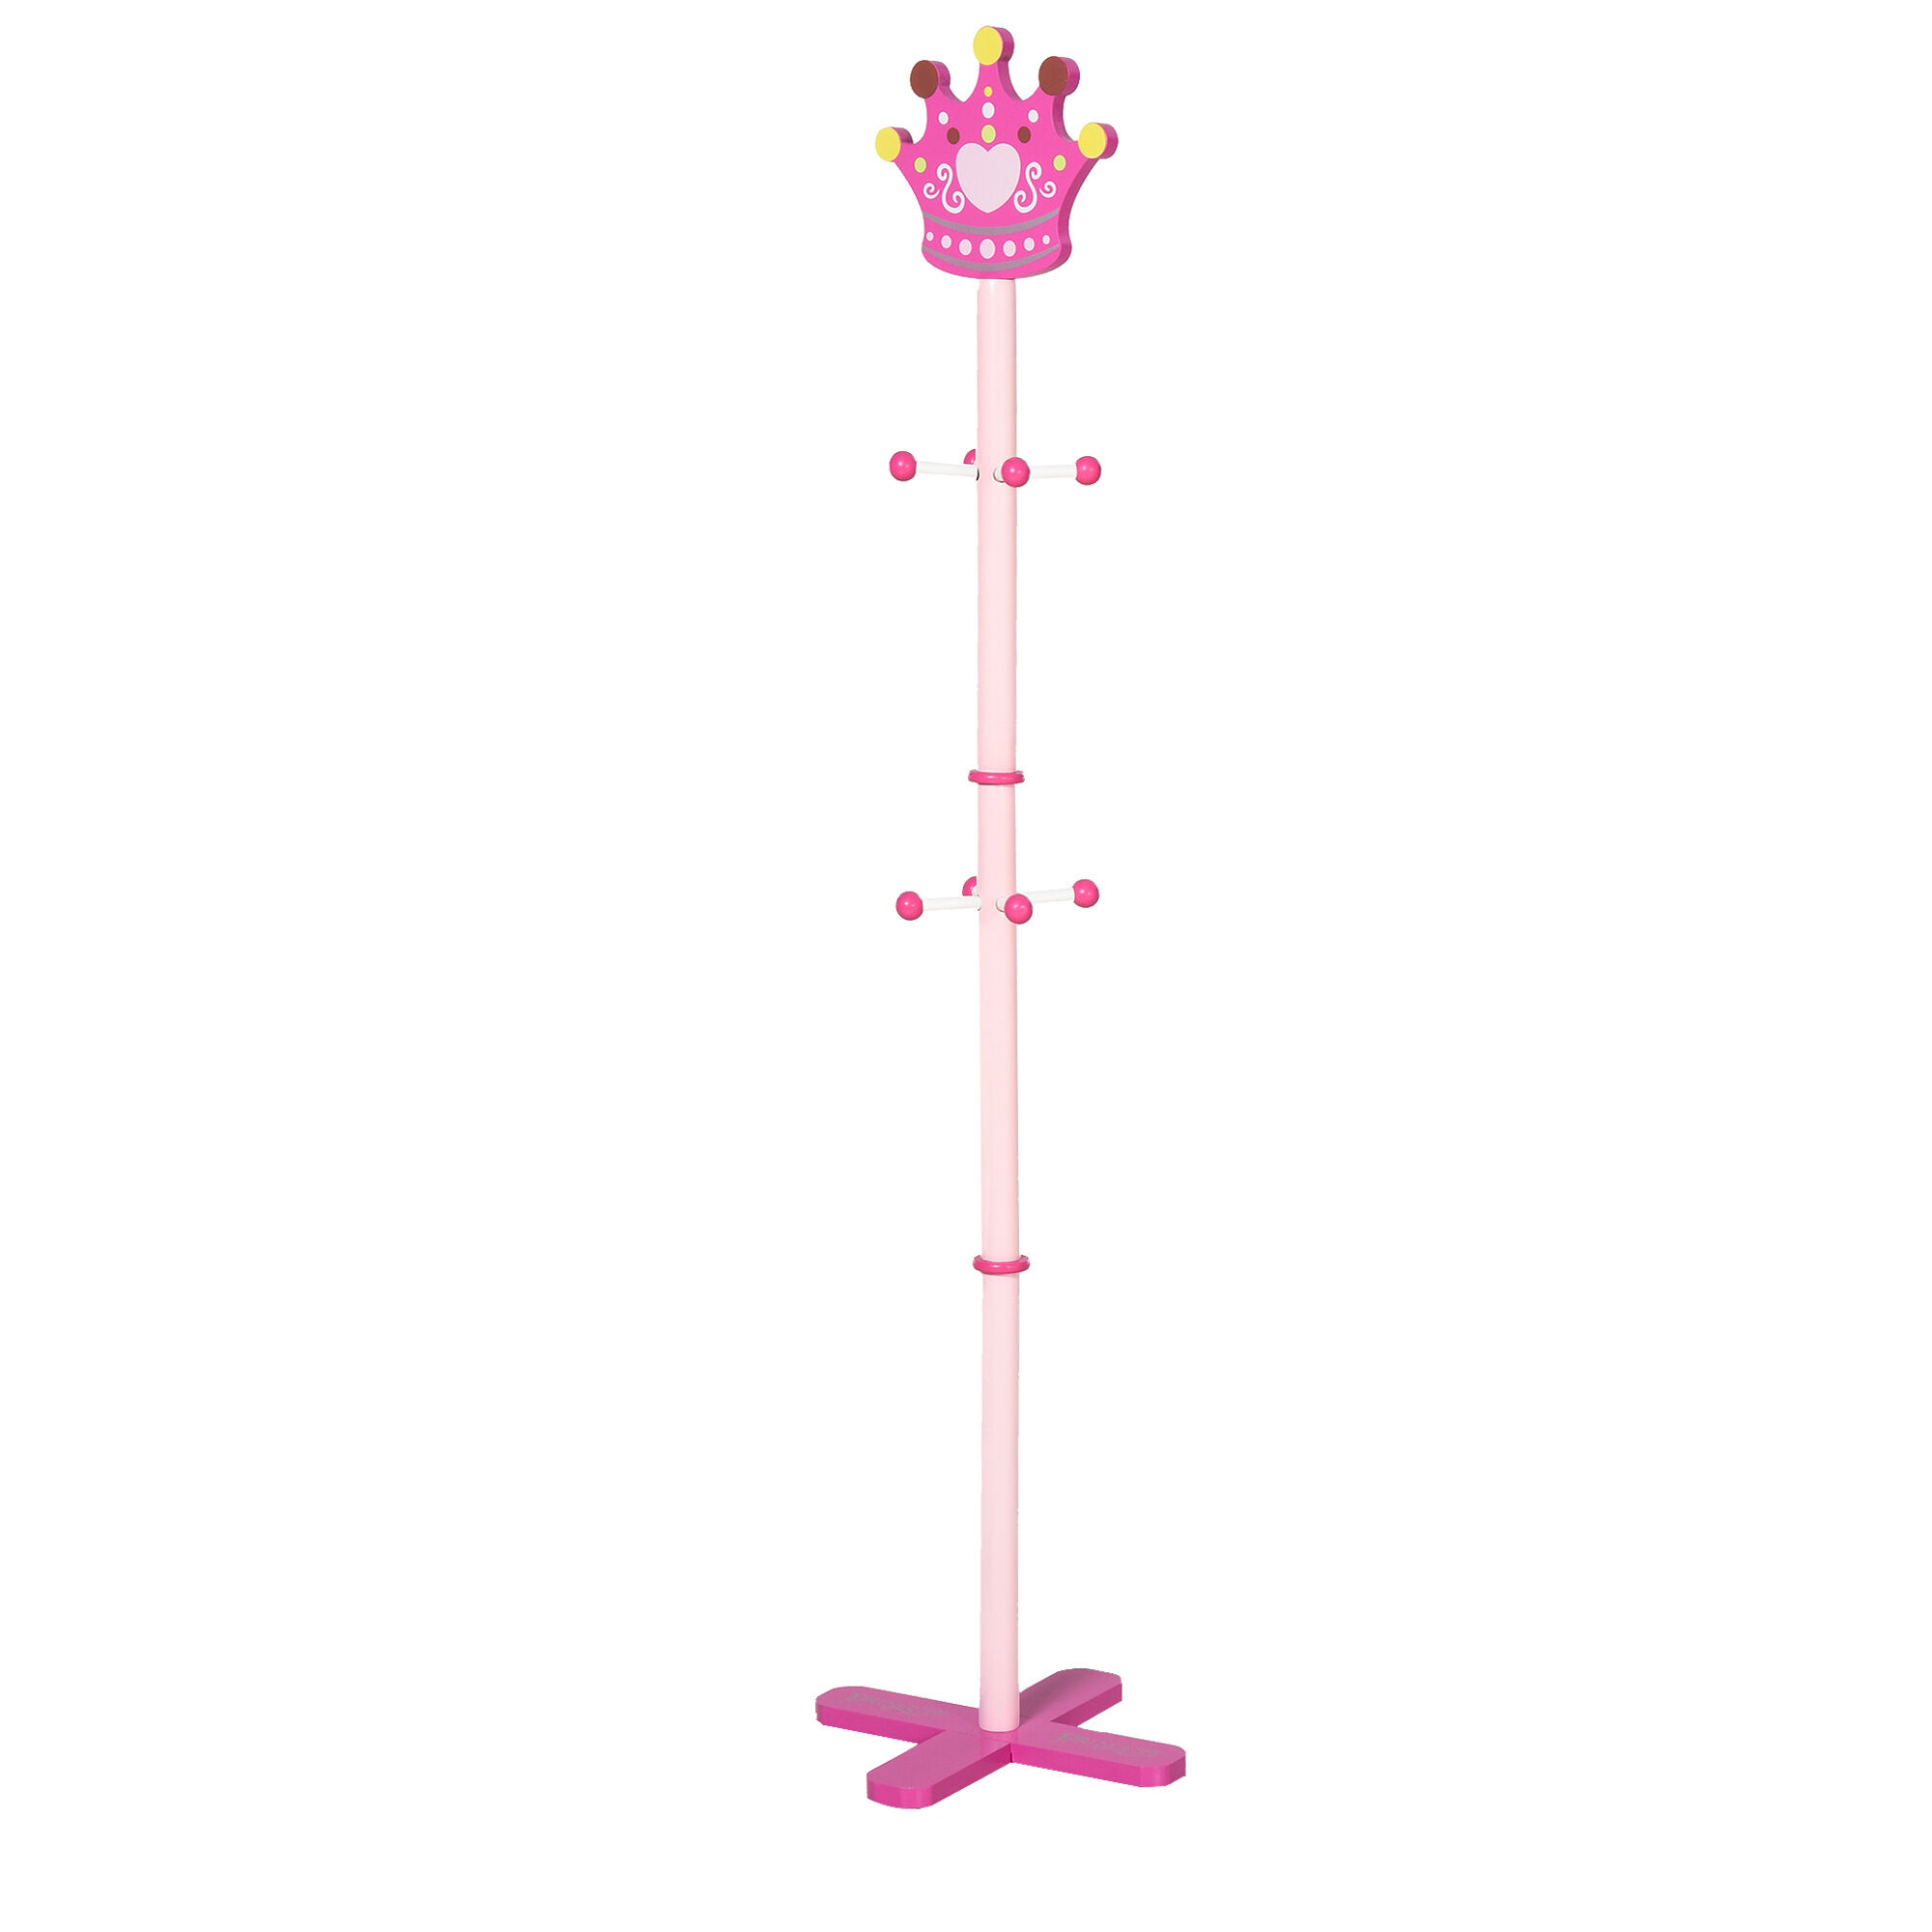 Homcom Appendiabiti da Terra per bambini design corona, base forma X, 8 ganci, in legno, rosa, 35 x 35 x 142cm